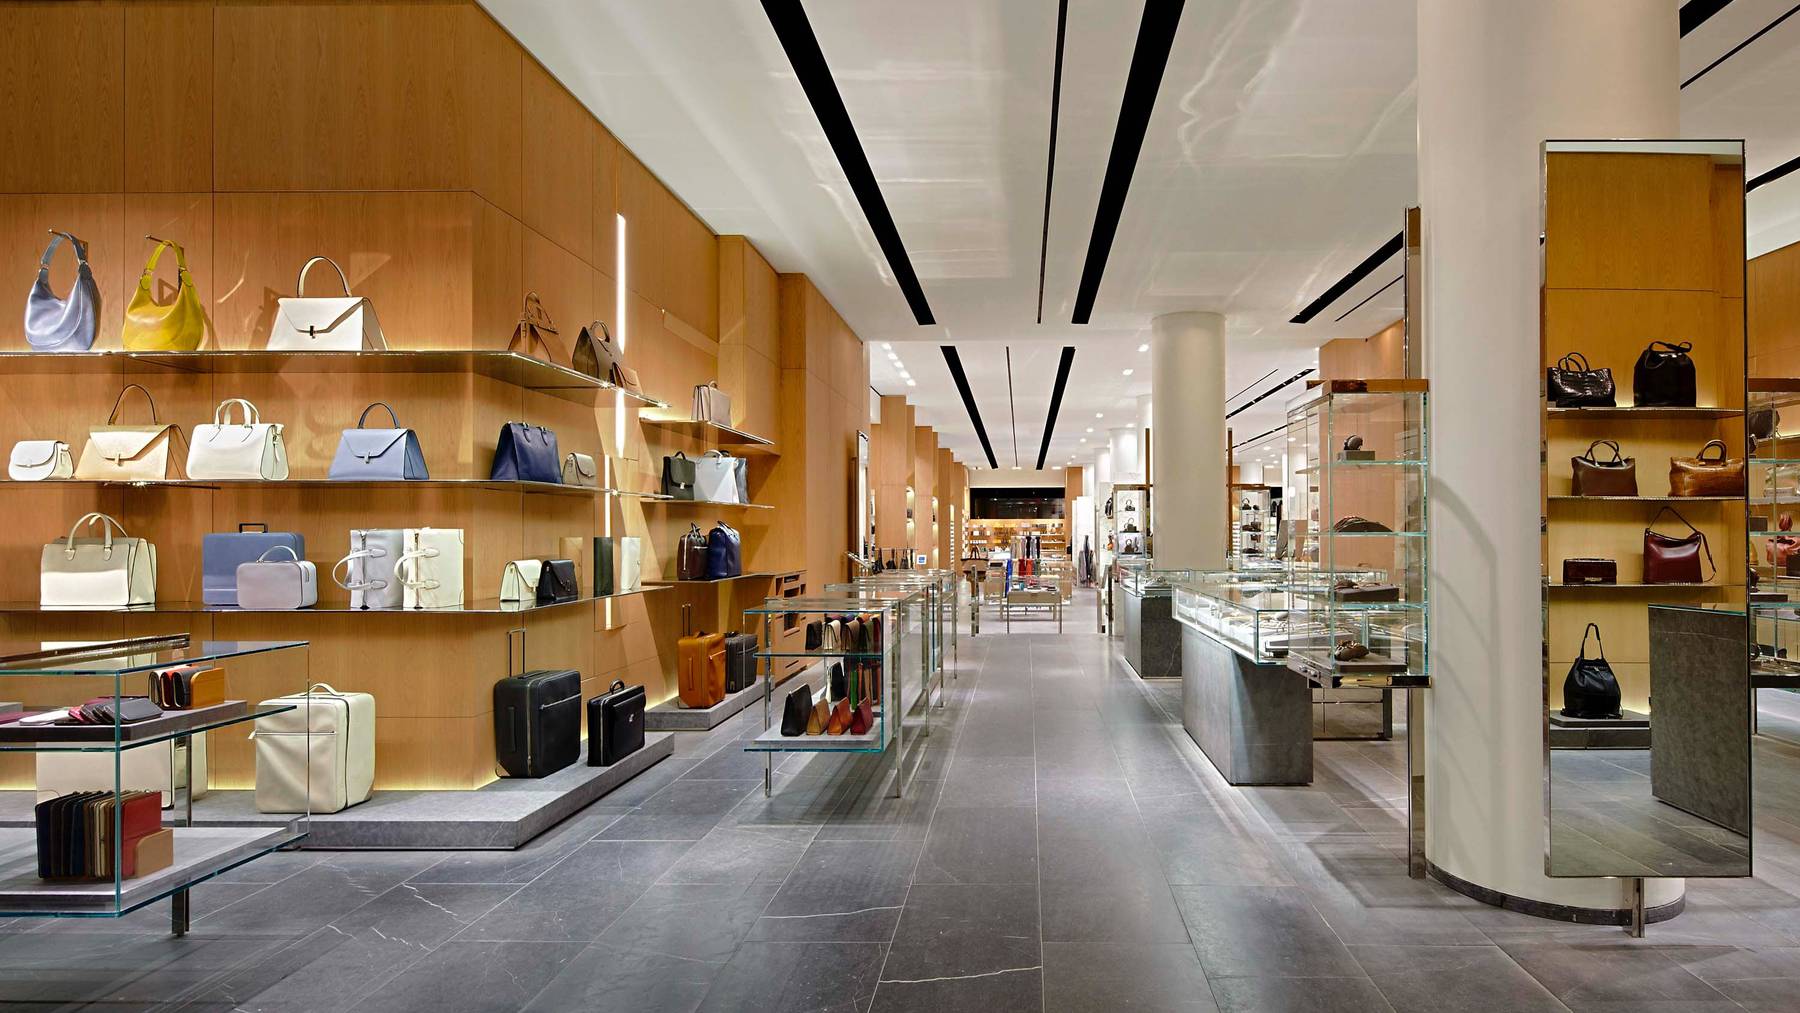 Barneys New York sales floor handbags accessories fashion buying